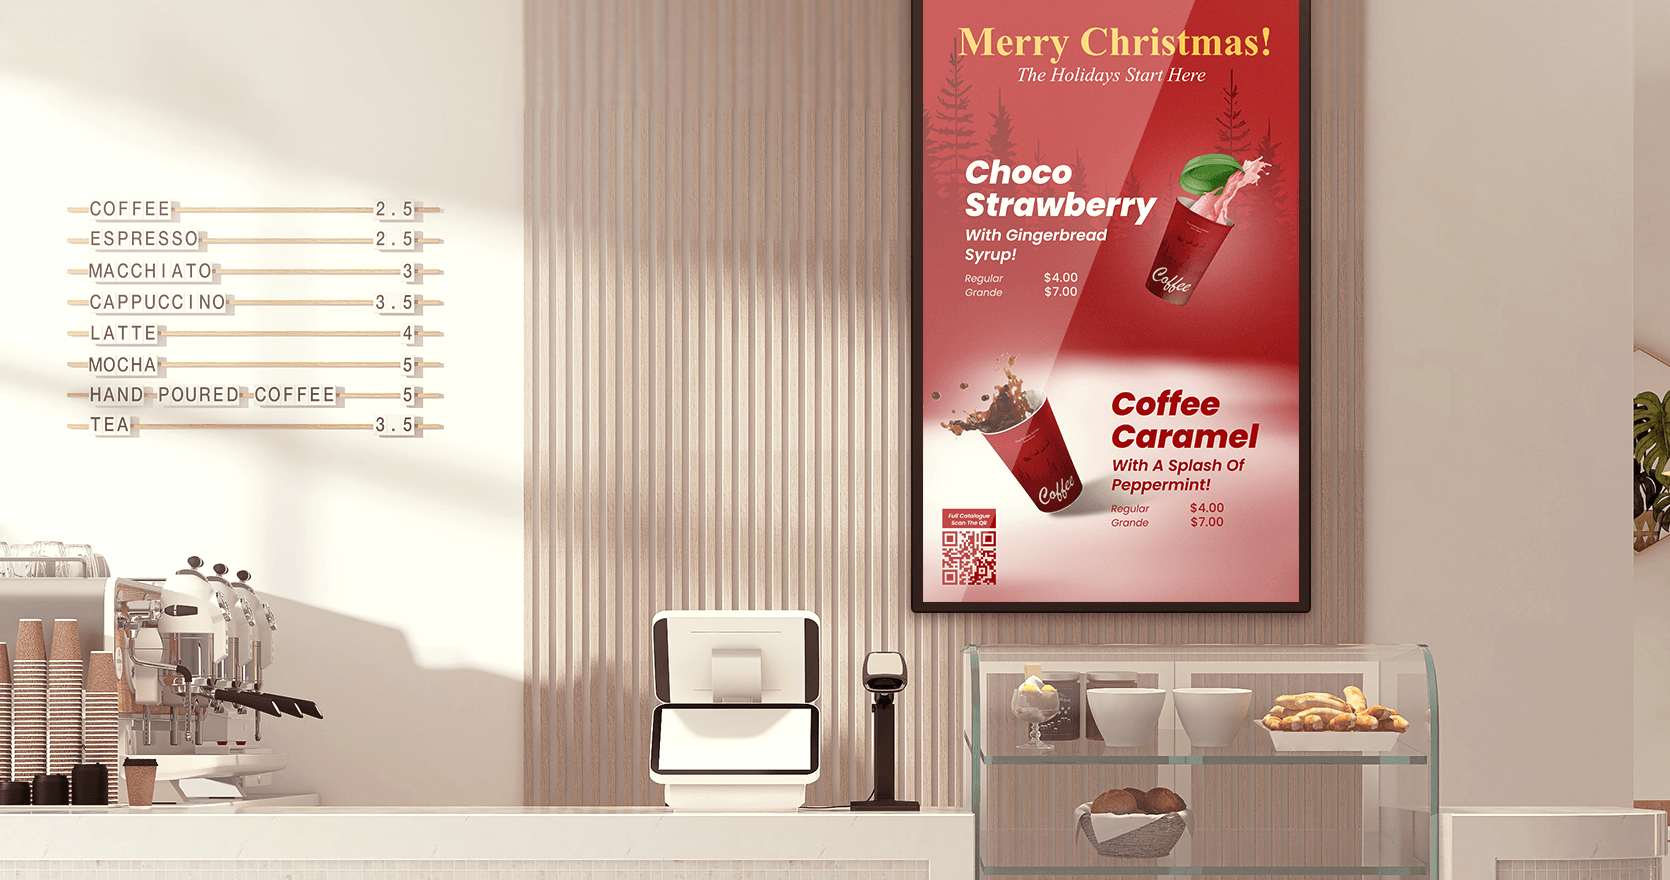 Digital signage with Christmas menu at a cafe.